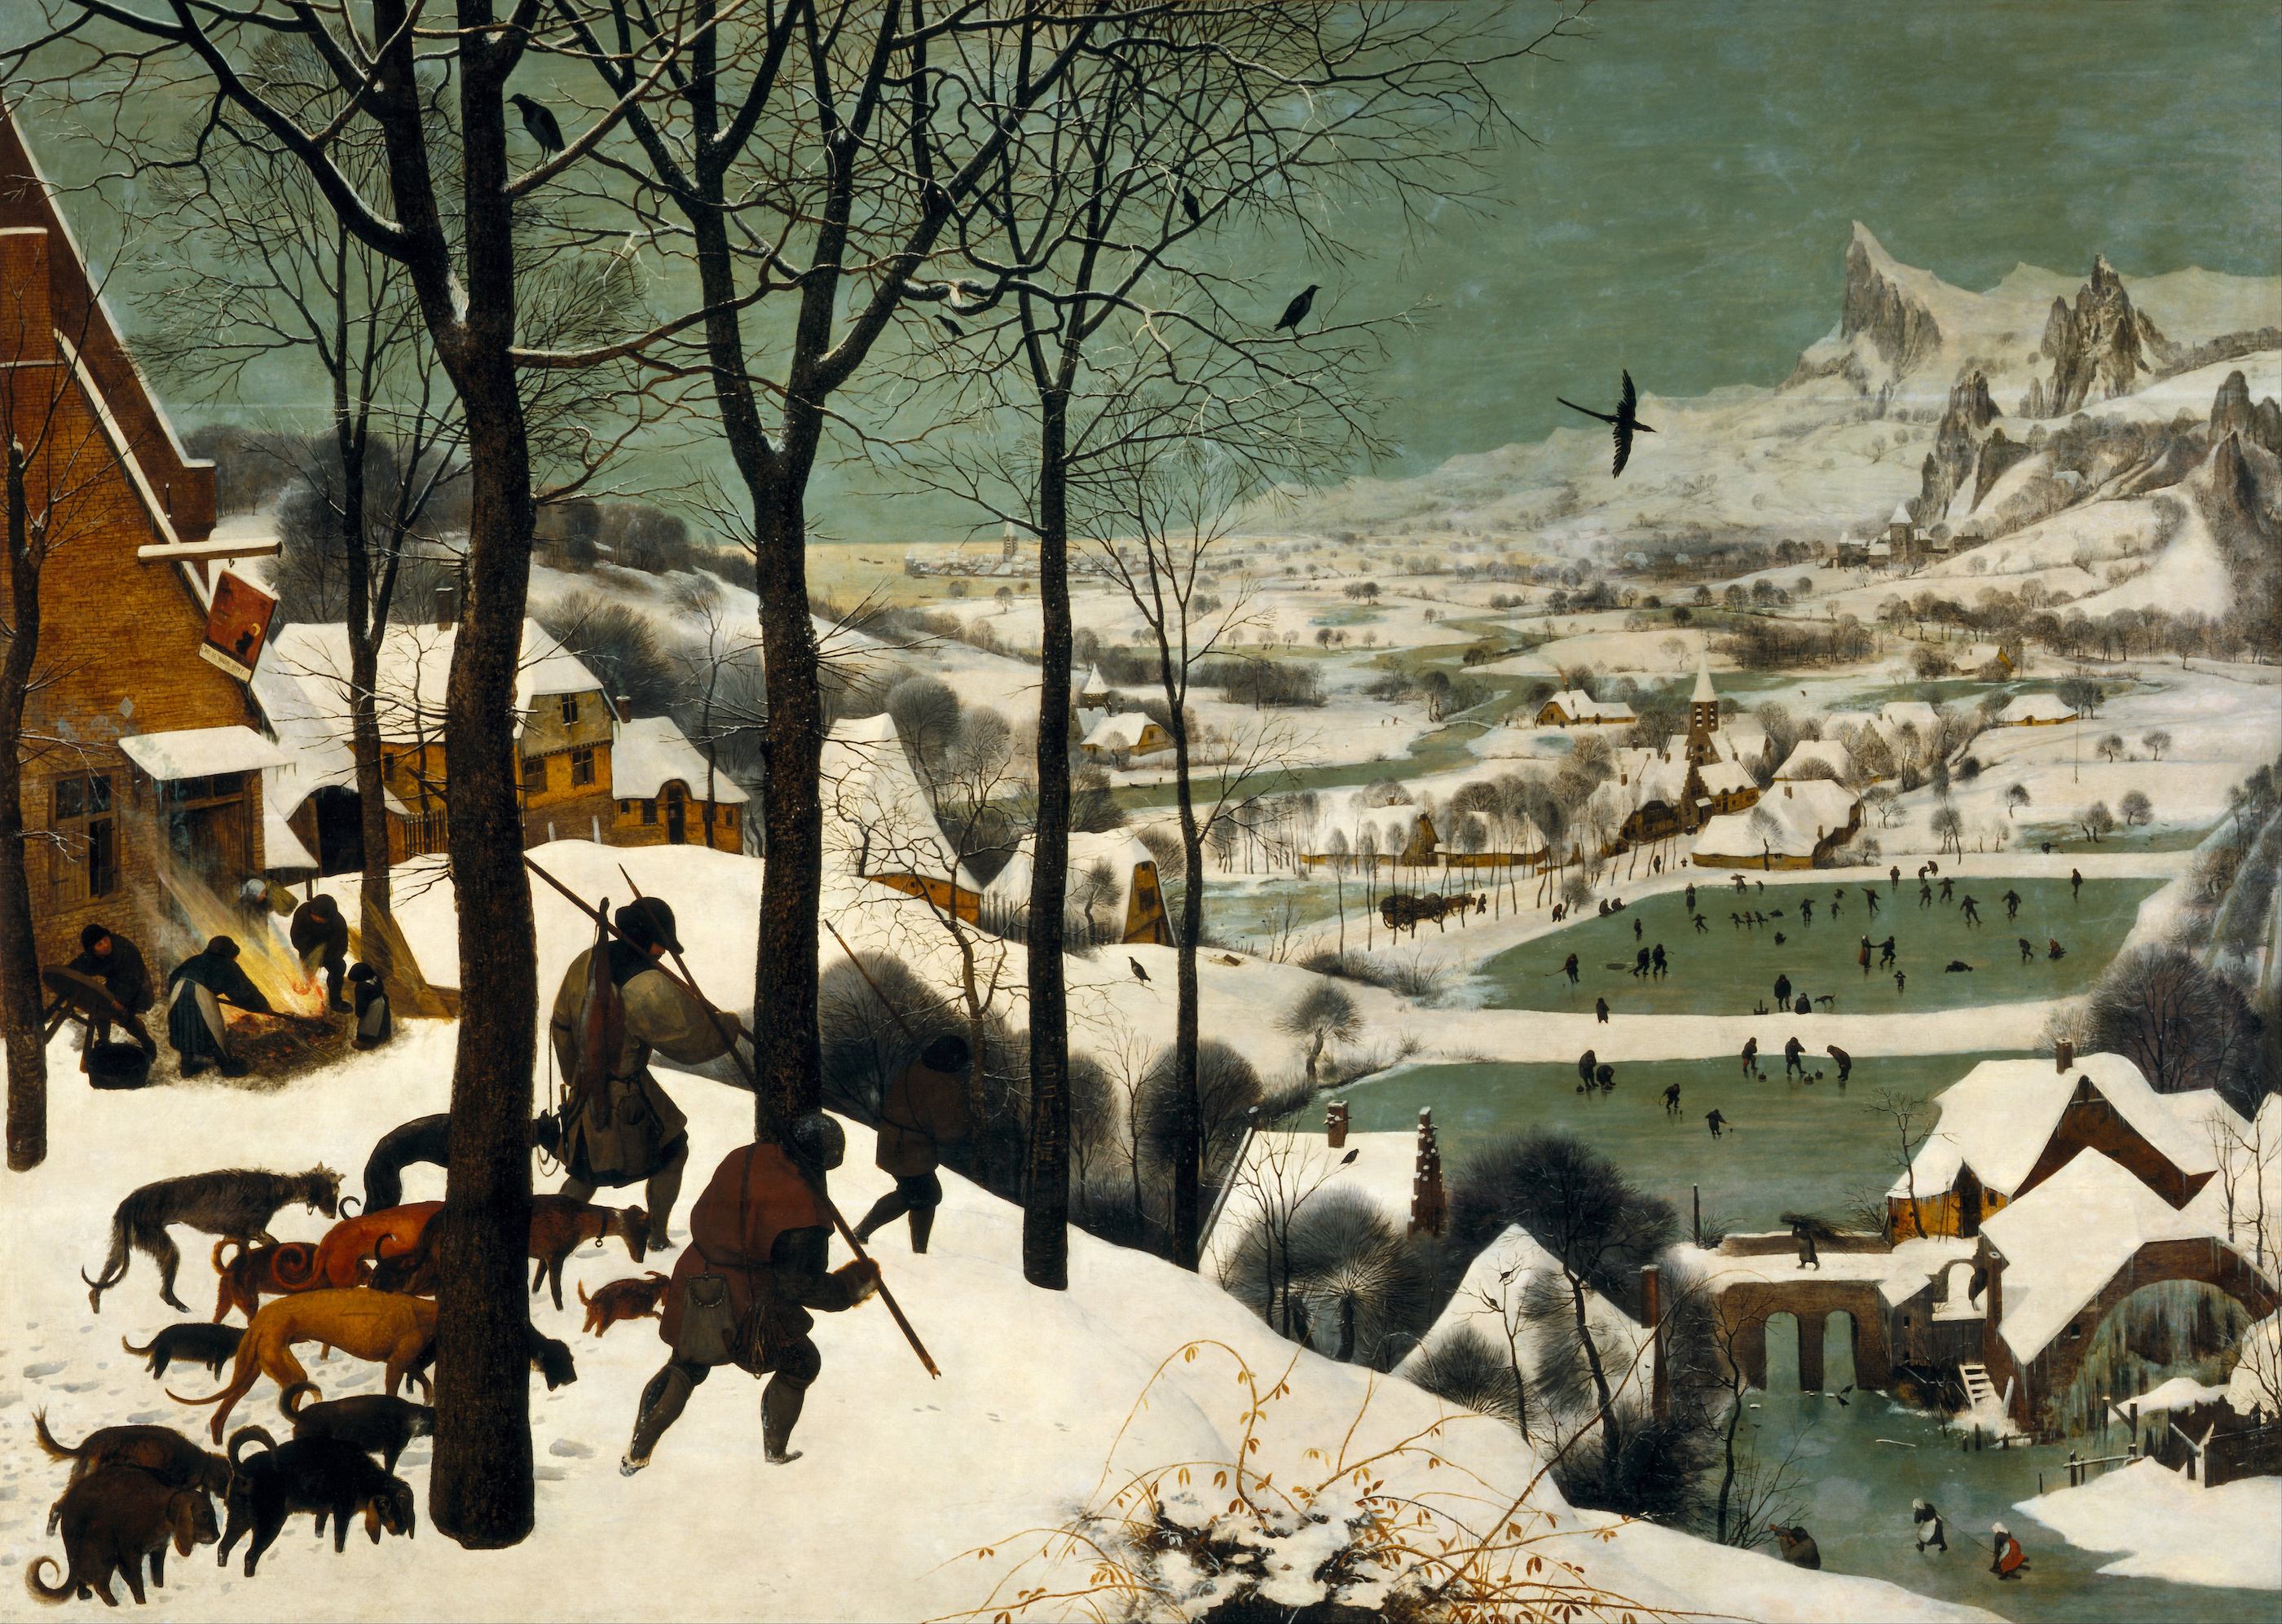 The Hunters in the Snow by Pieter Bruegel the Elder - 1565 - 162 x 117 cm Kunsthistorisches Museum